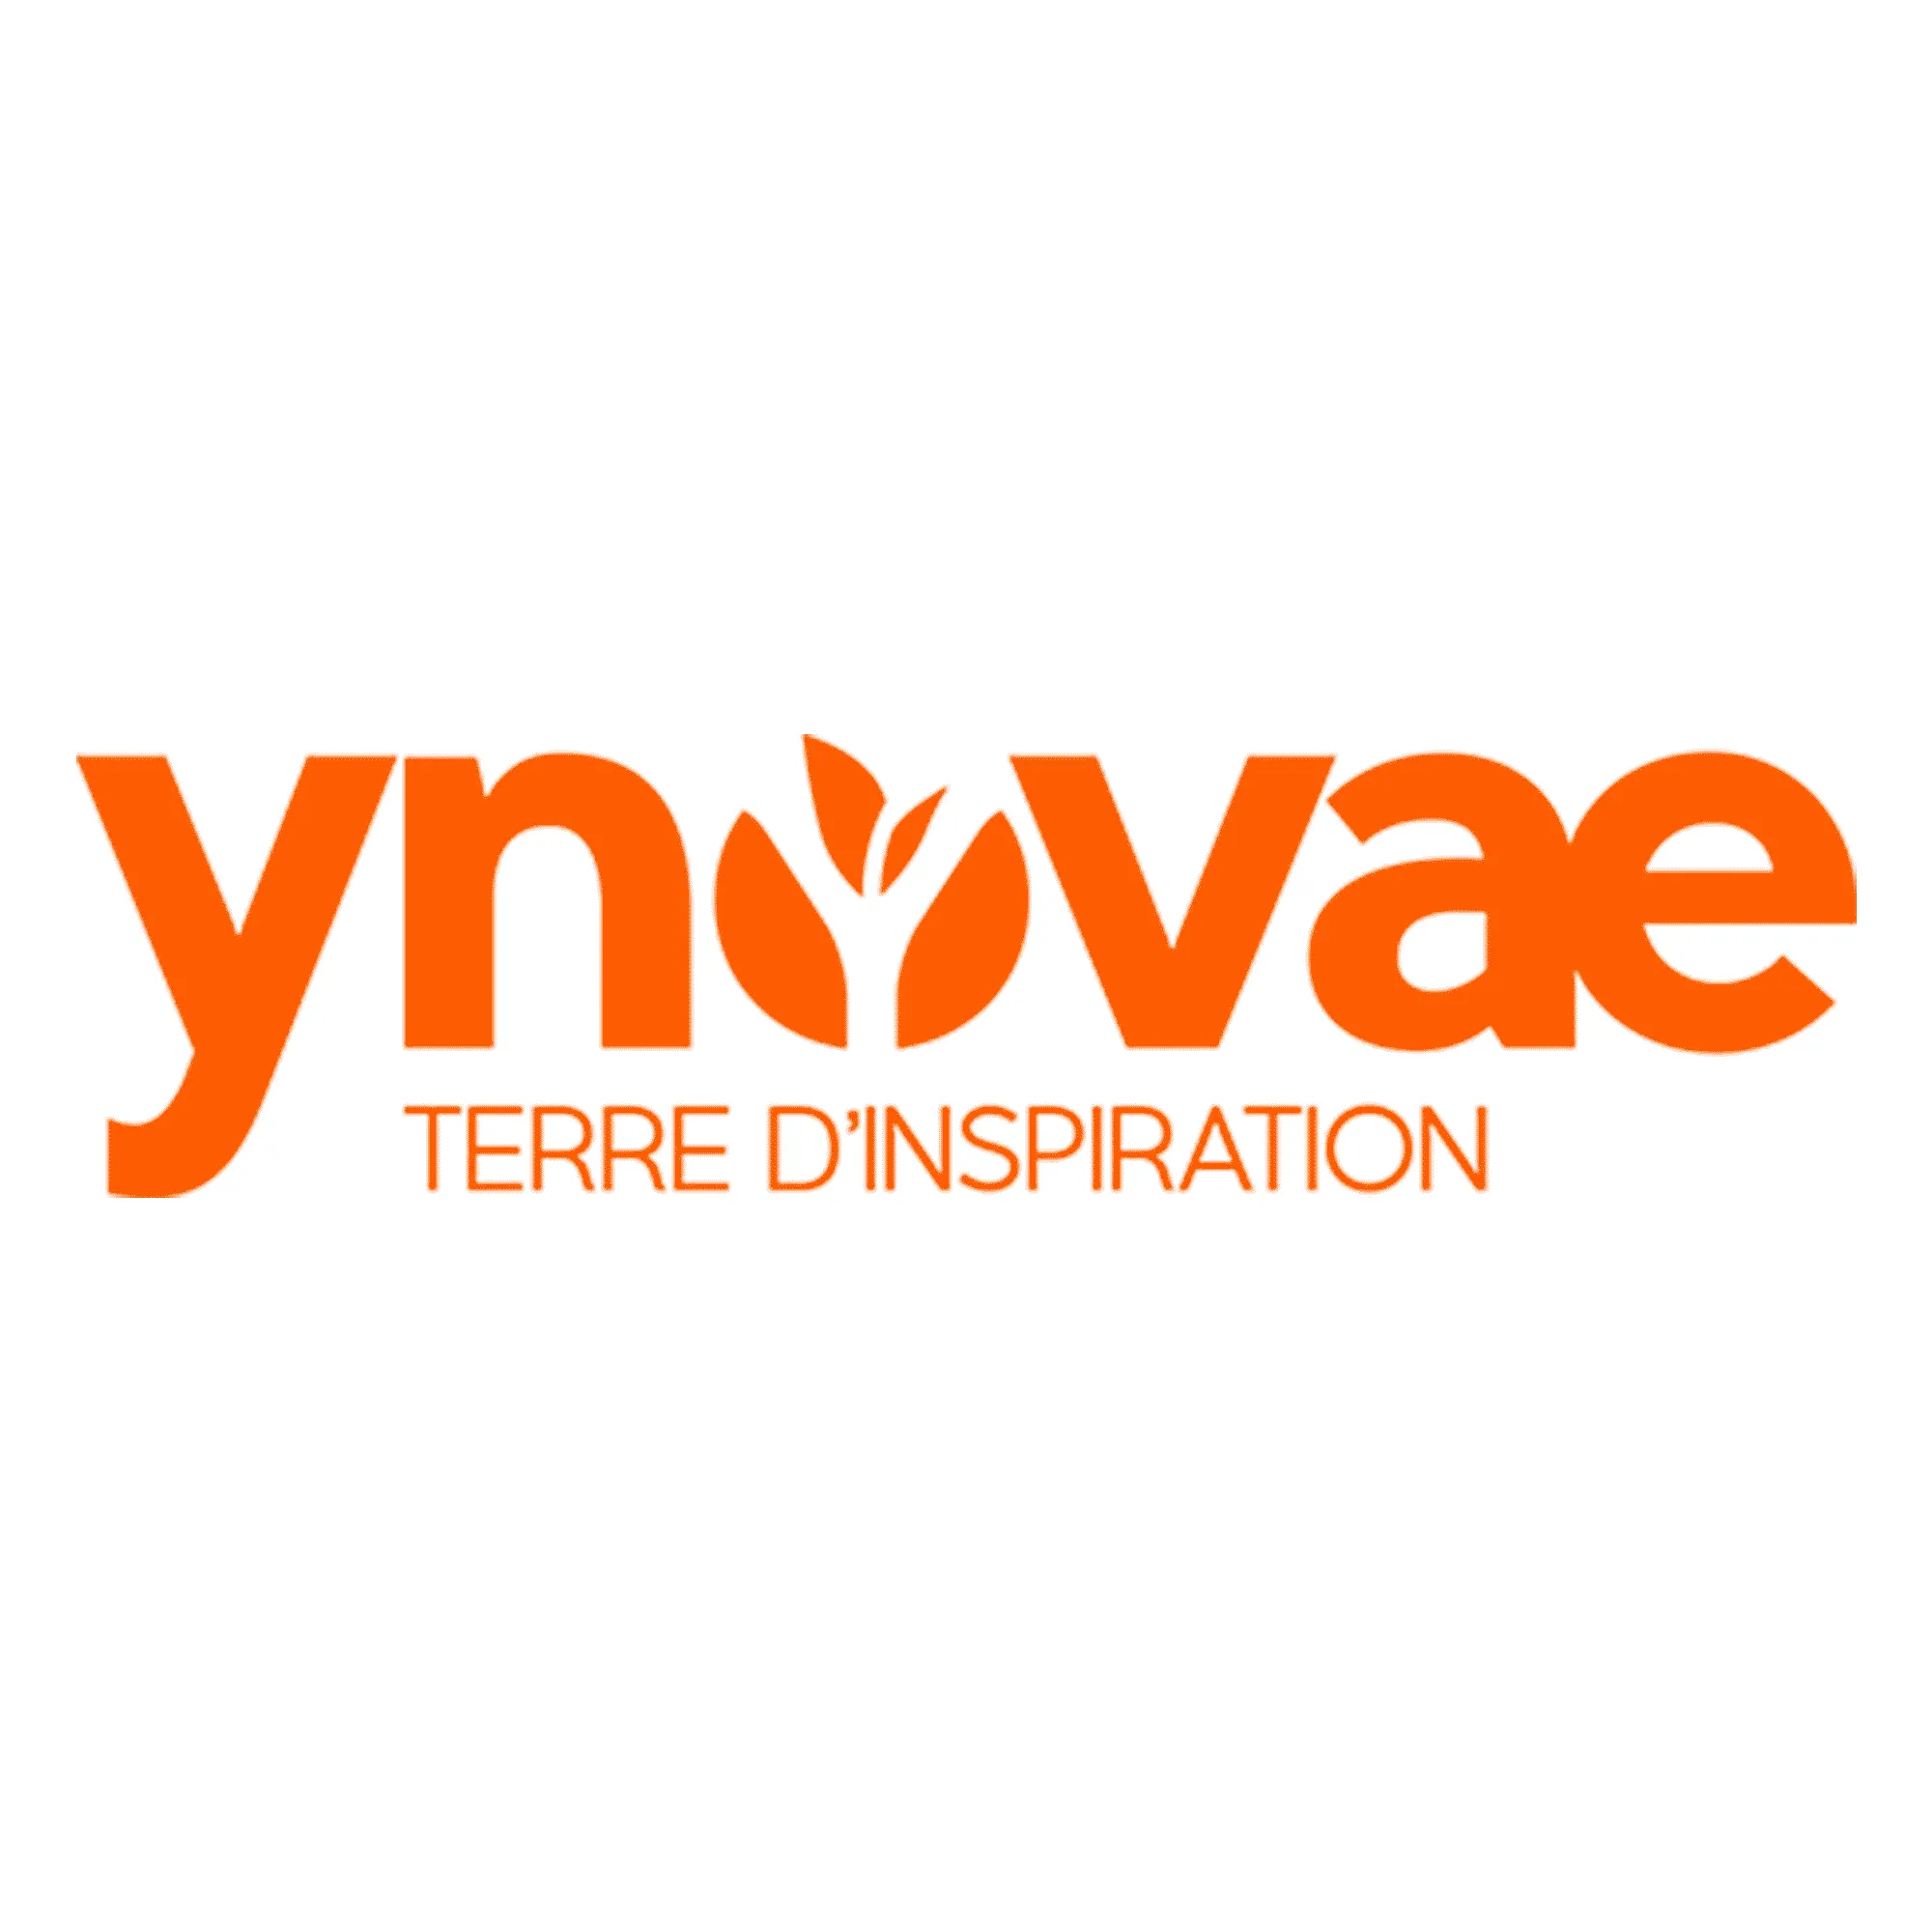 ynovea-carre logo